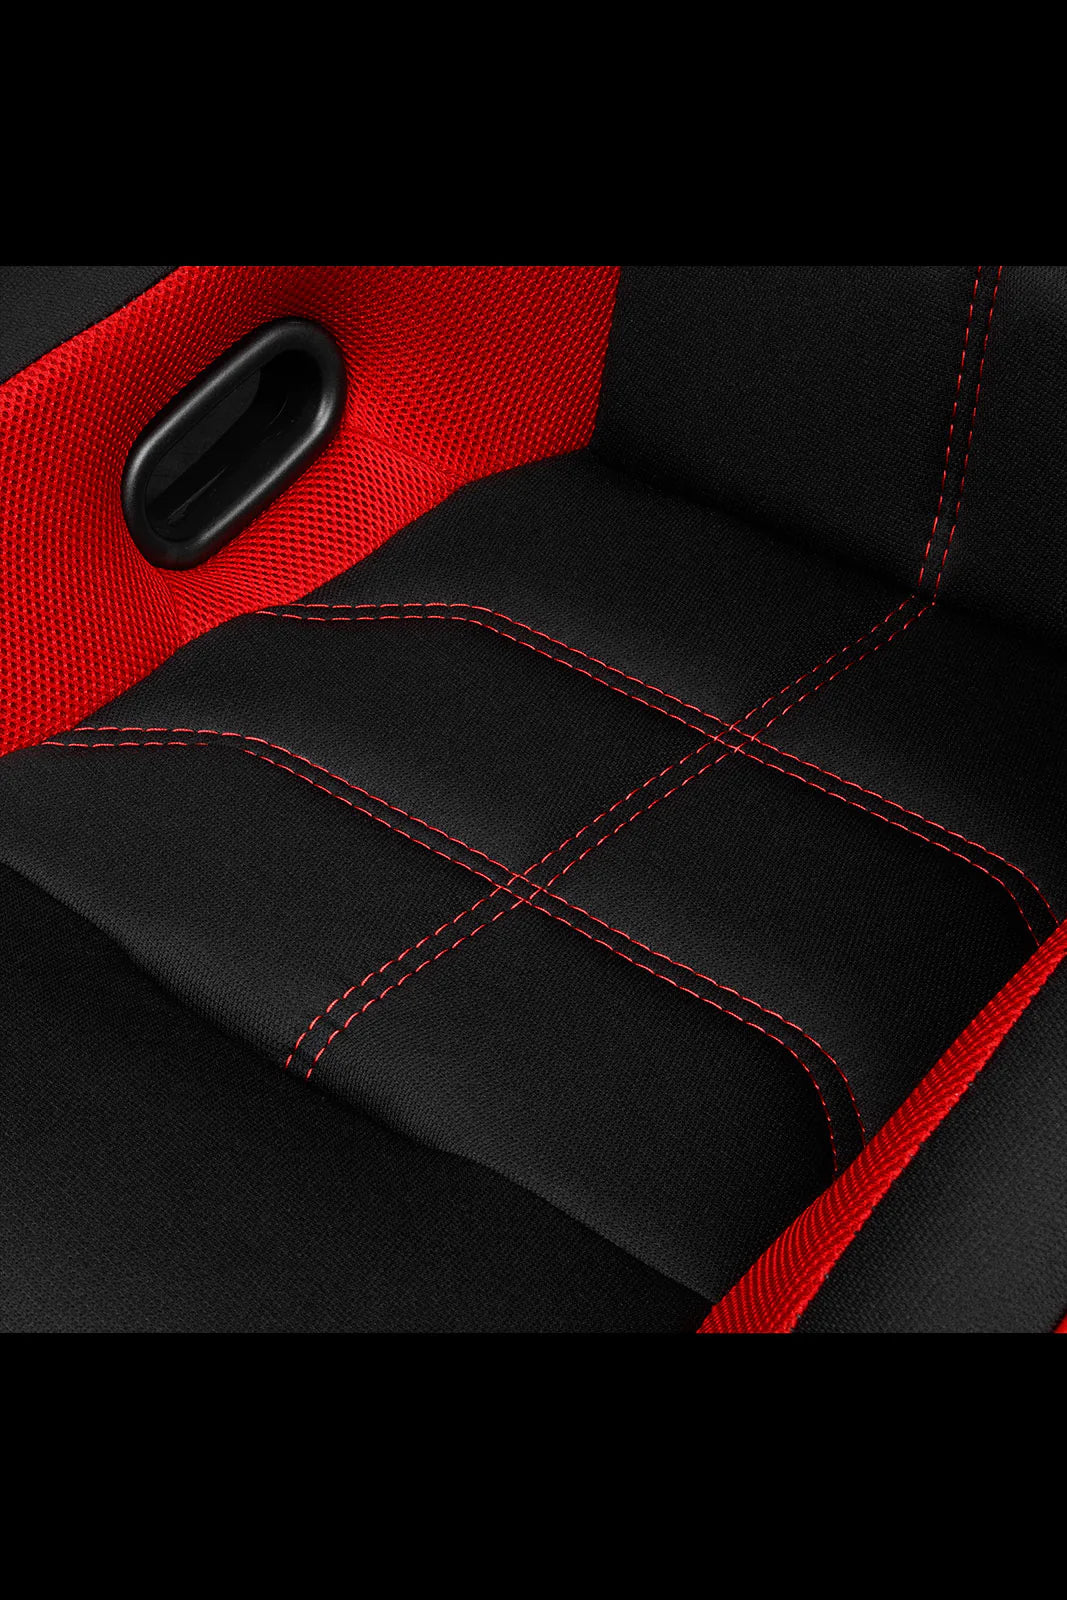 BRAUM FALCON-X Series FIA Certified Fixed Back Racing Seat (Black Cloth | Red Trim) – Priced Per Seat